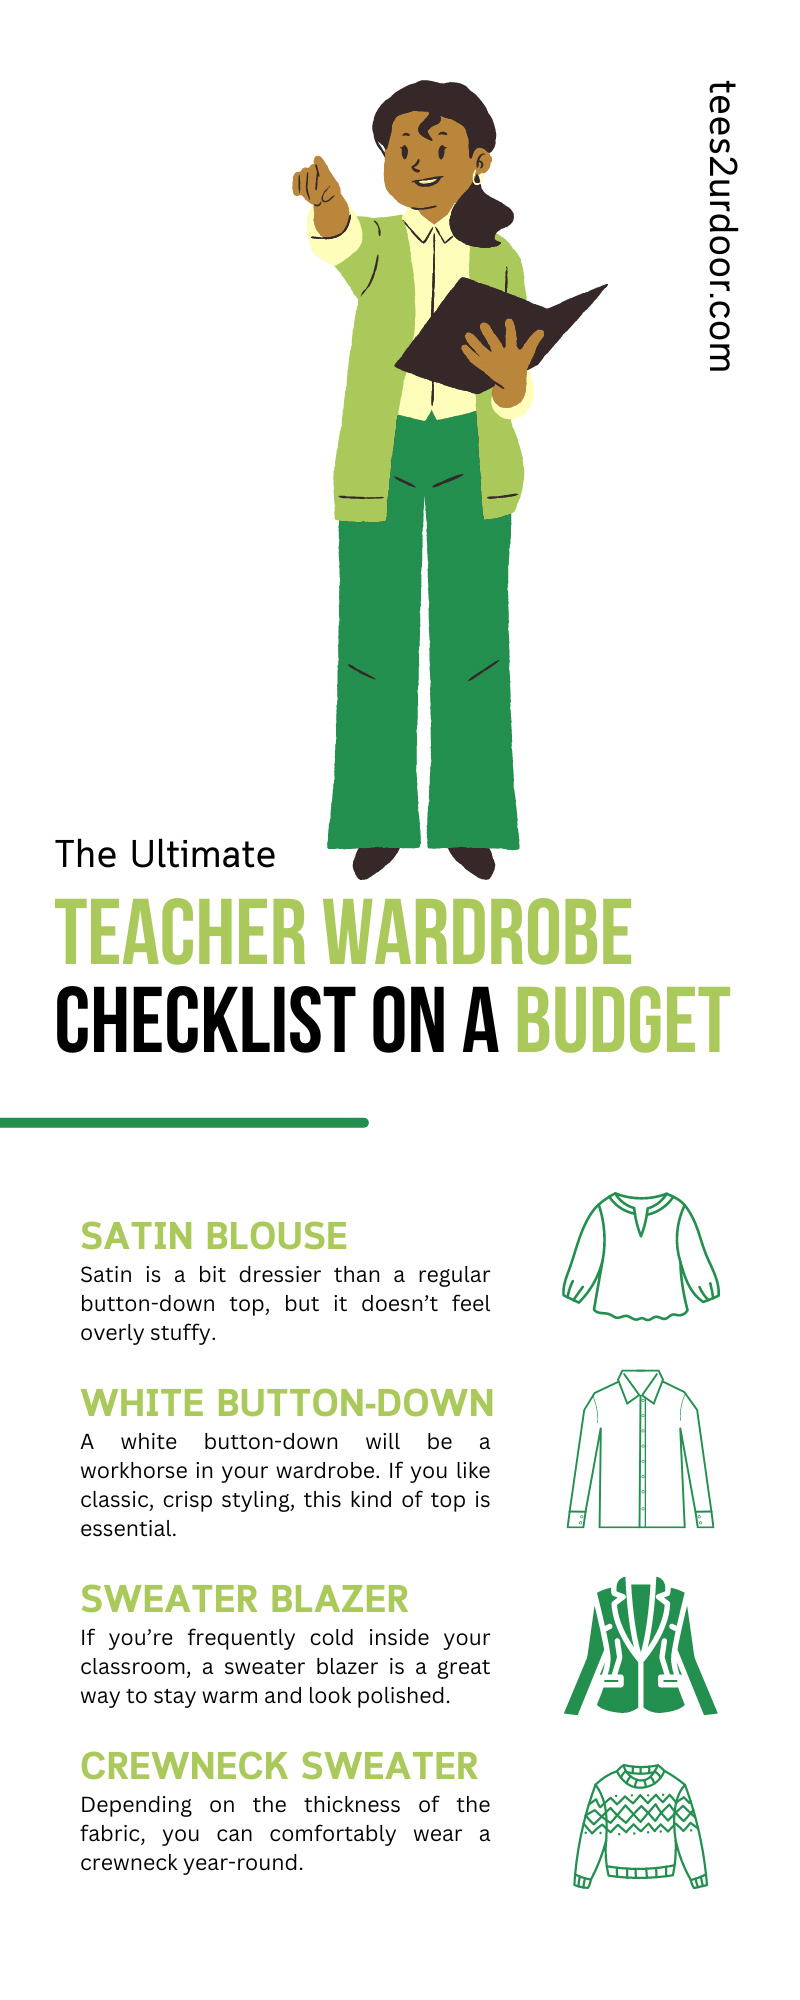 The Ultimate Teacher Wardrobe Checklist on a Budget